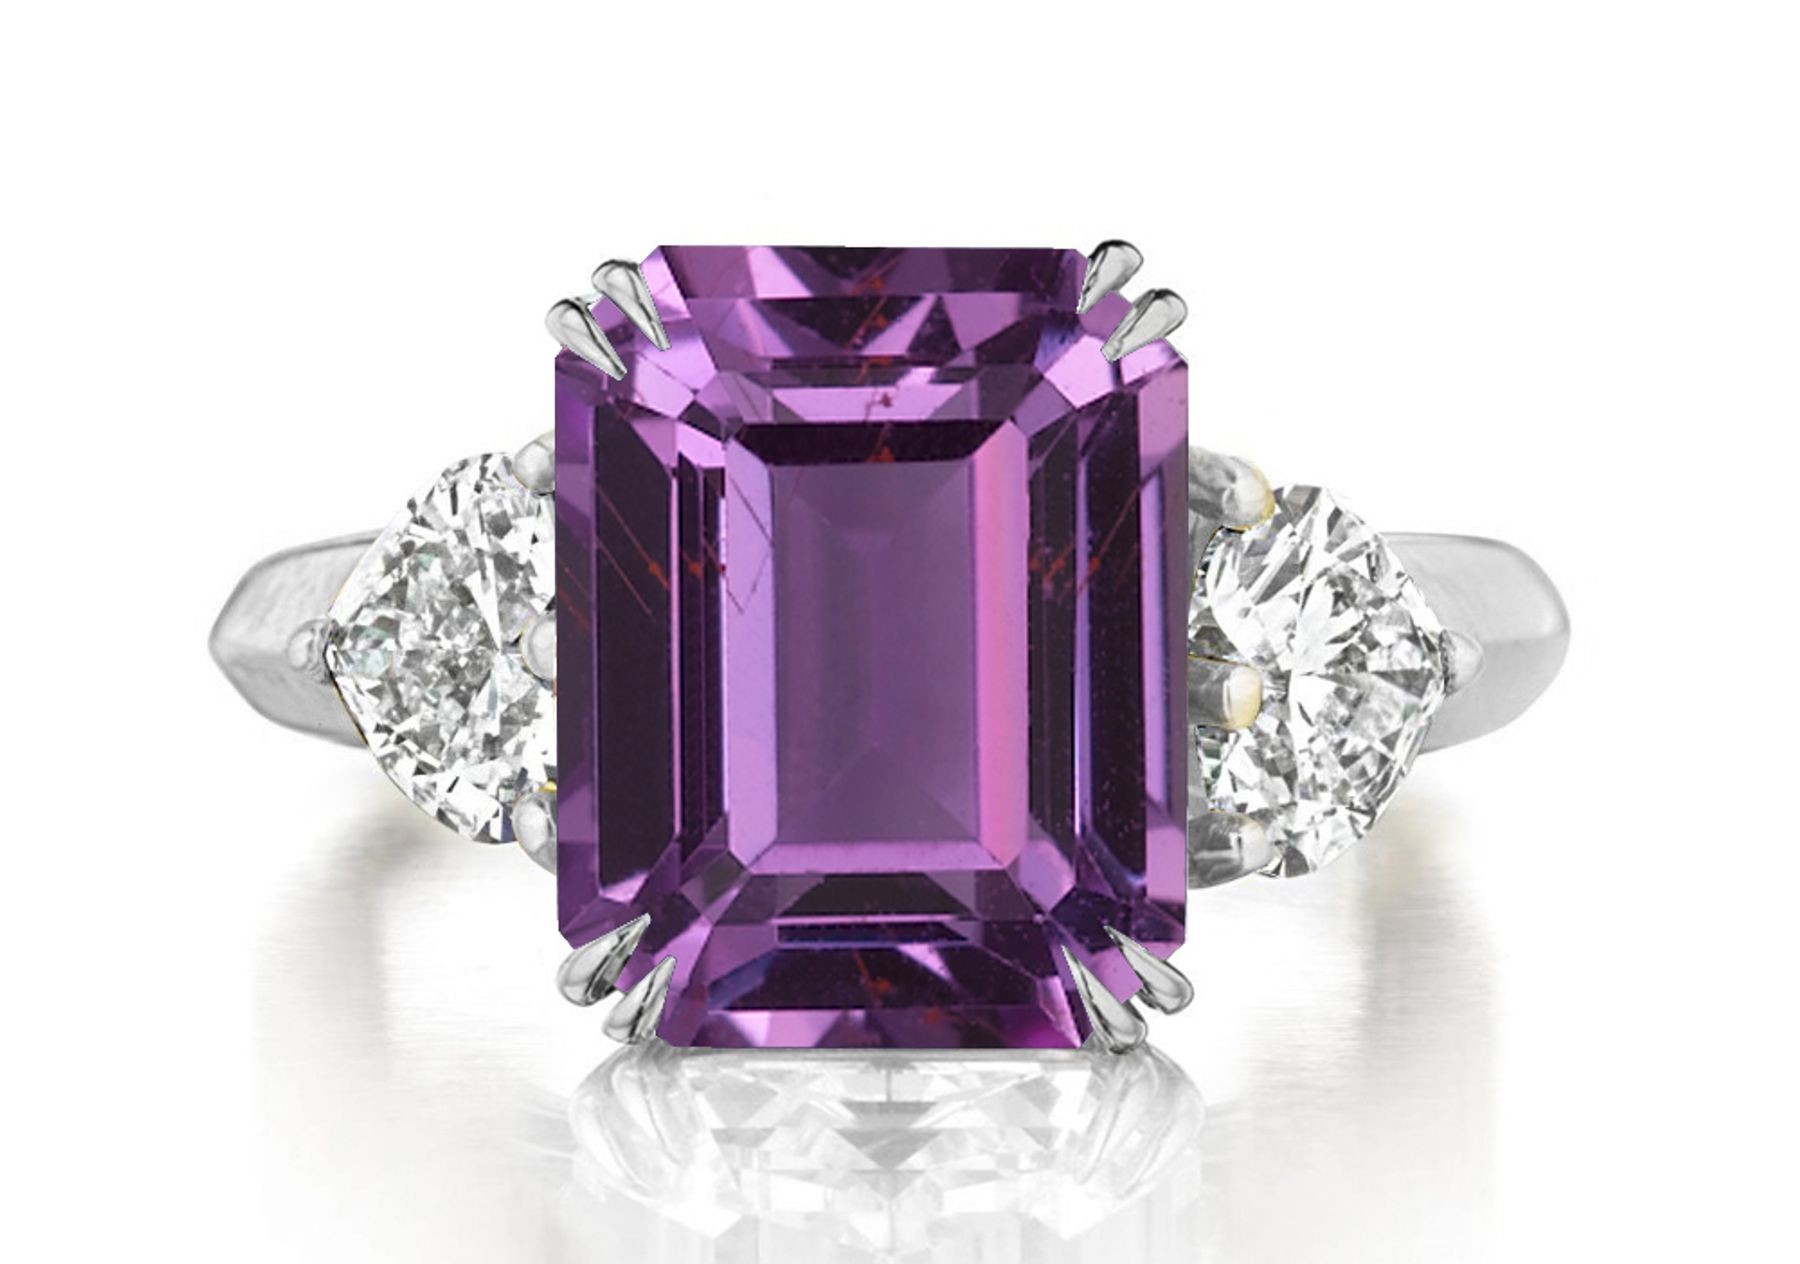 Premium Quality Unique Heart Shaped Diamonds & Purple Sapphire Emerald Cut Three Stone Rings